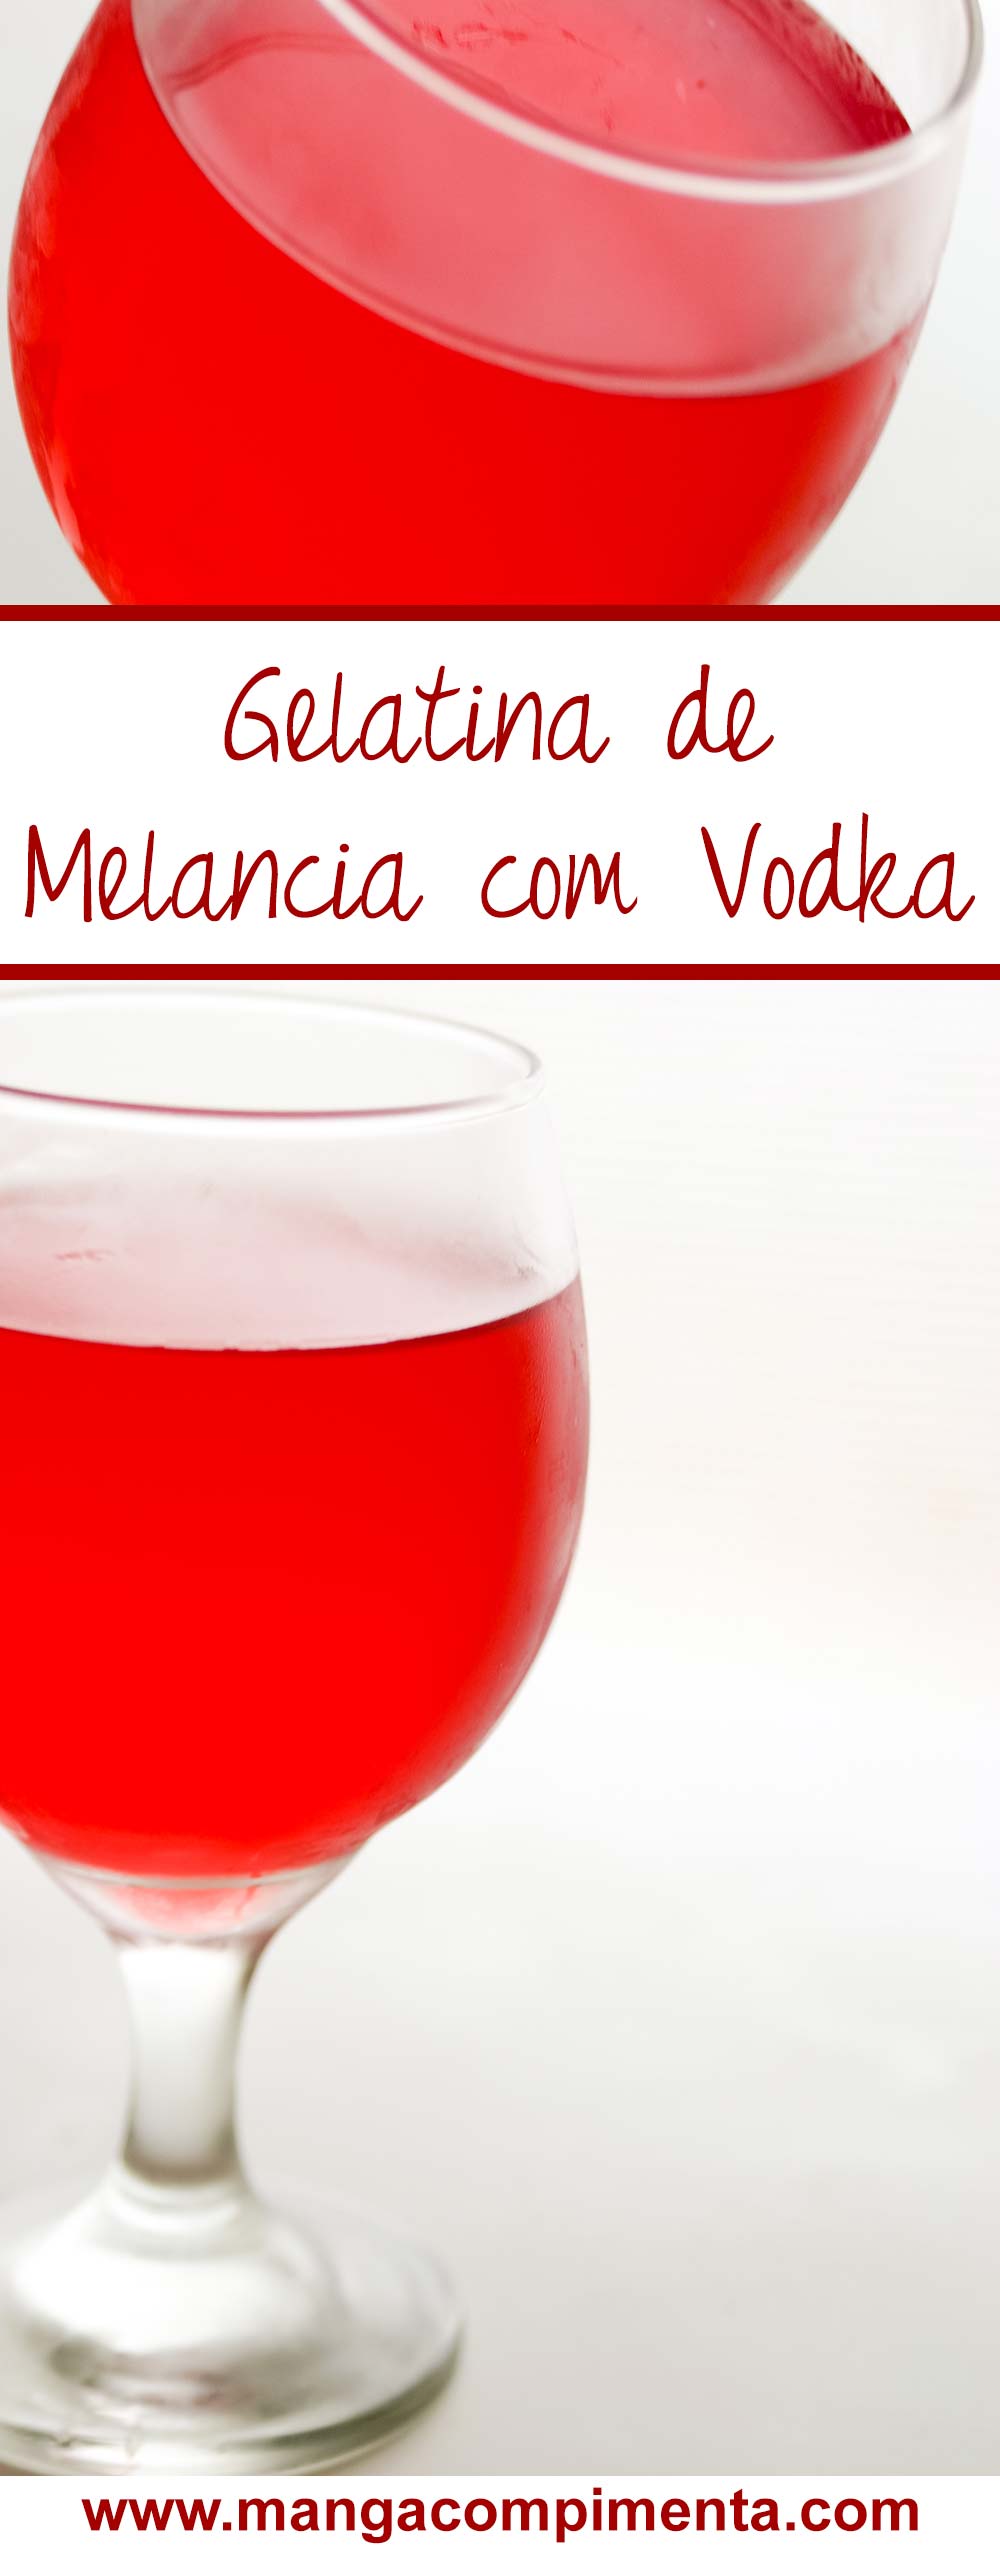 Gelatina de Melancia com Vodka - sobremesa para dia de festa!